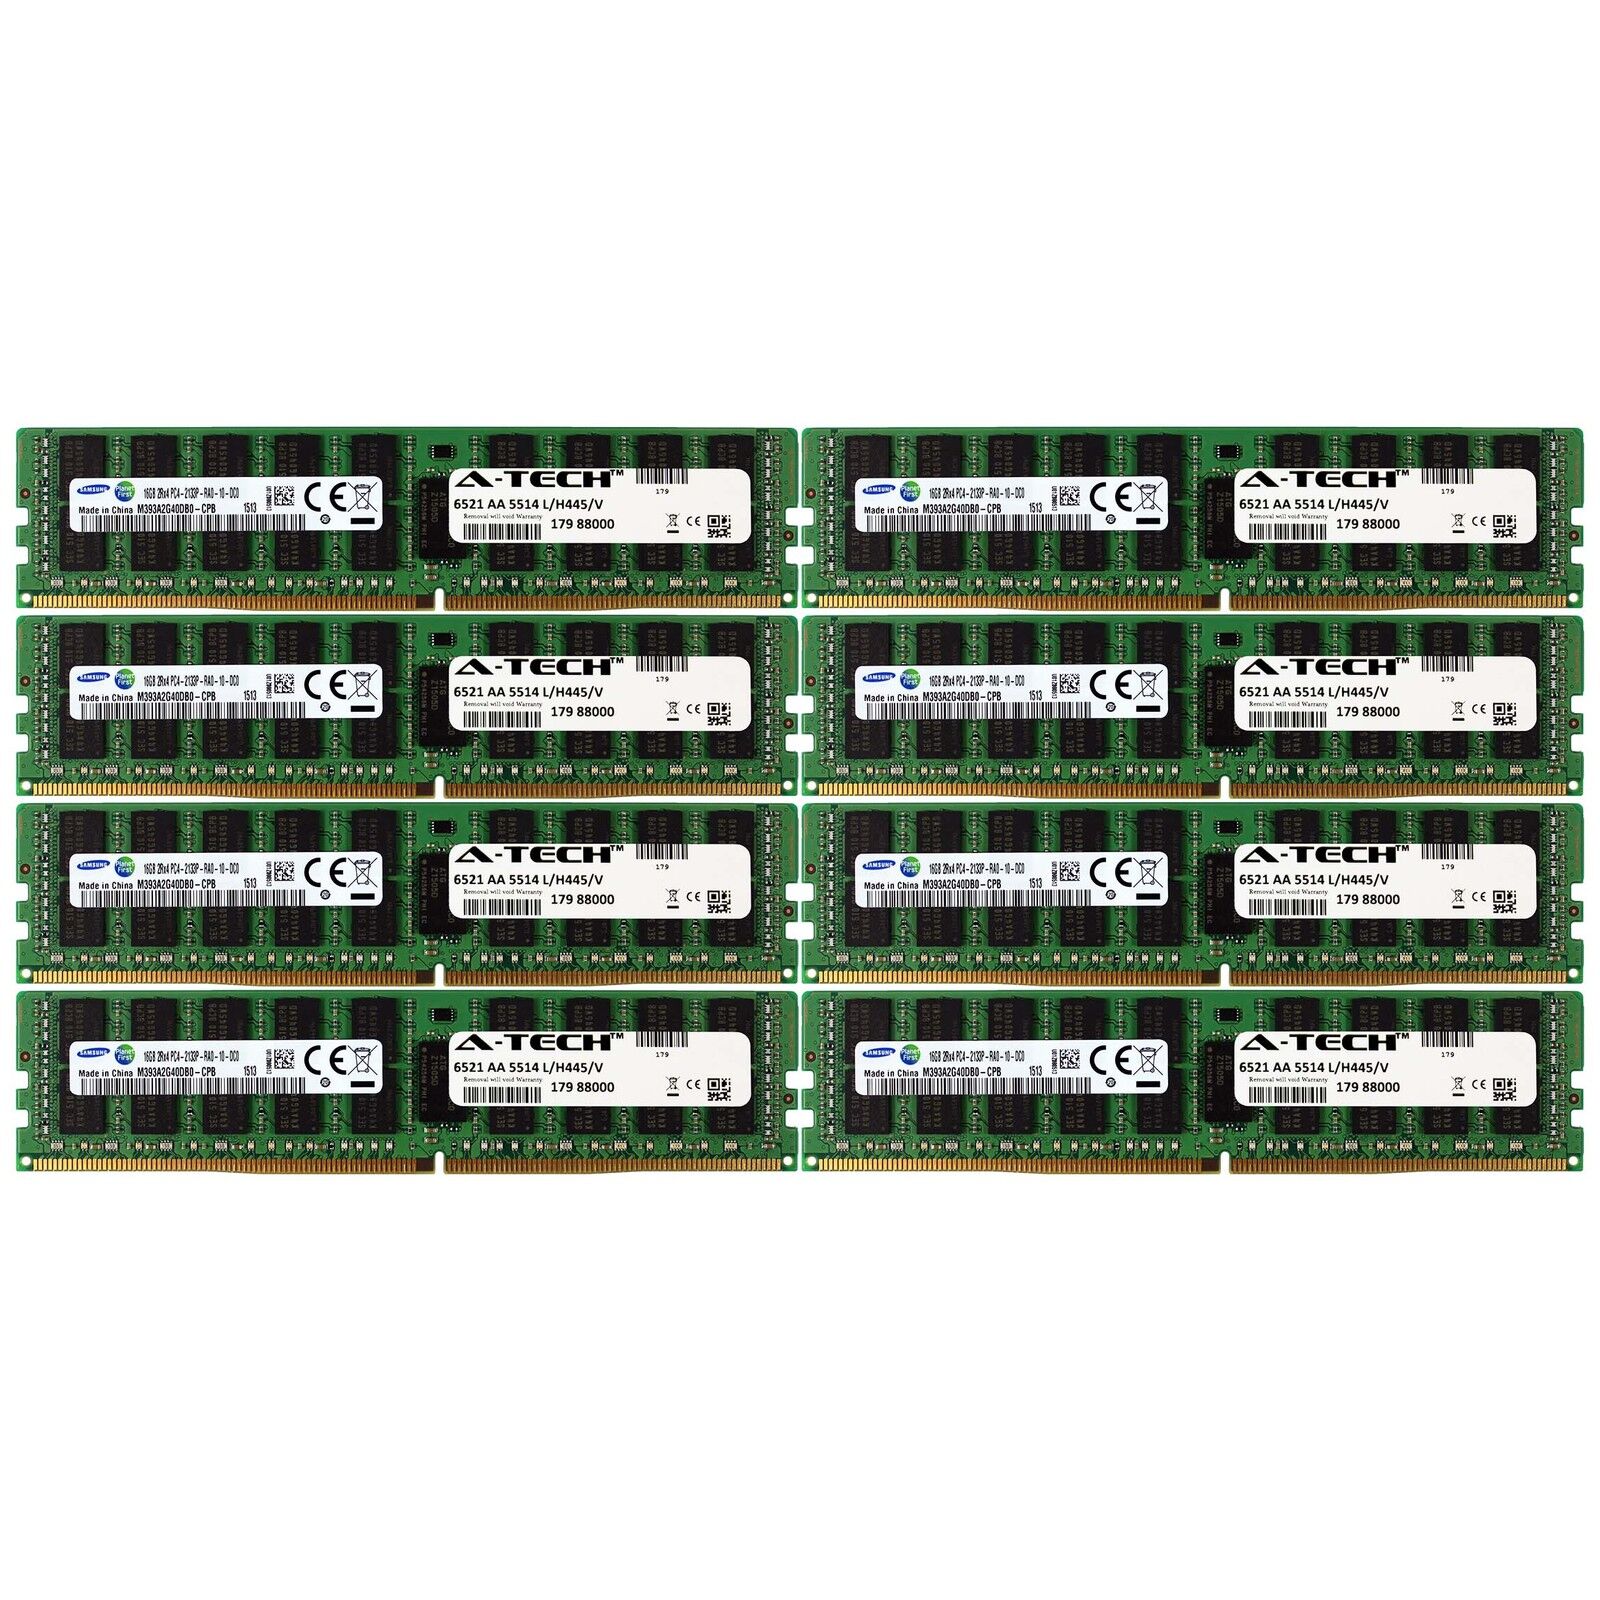 DDR4 2133MHz Samsung 128GB Kit 8x 16GB HP Apollo 4500 4200 726719-B21 Memory RAM